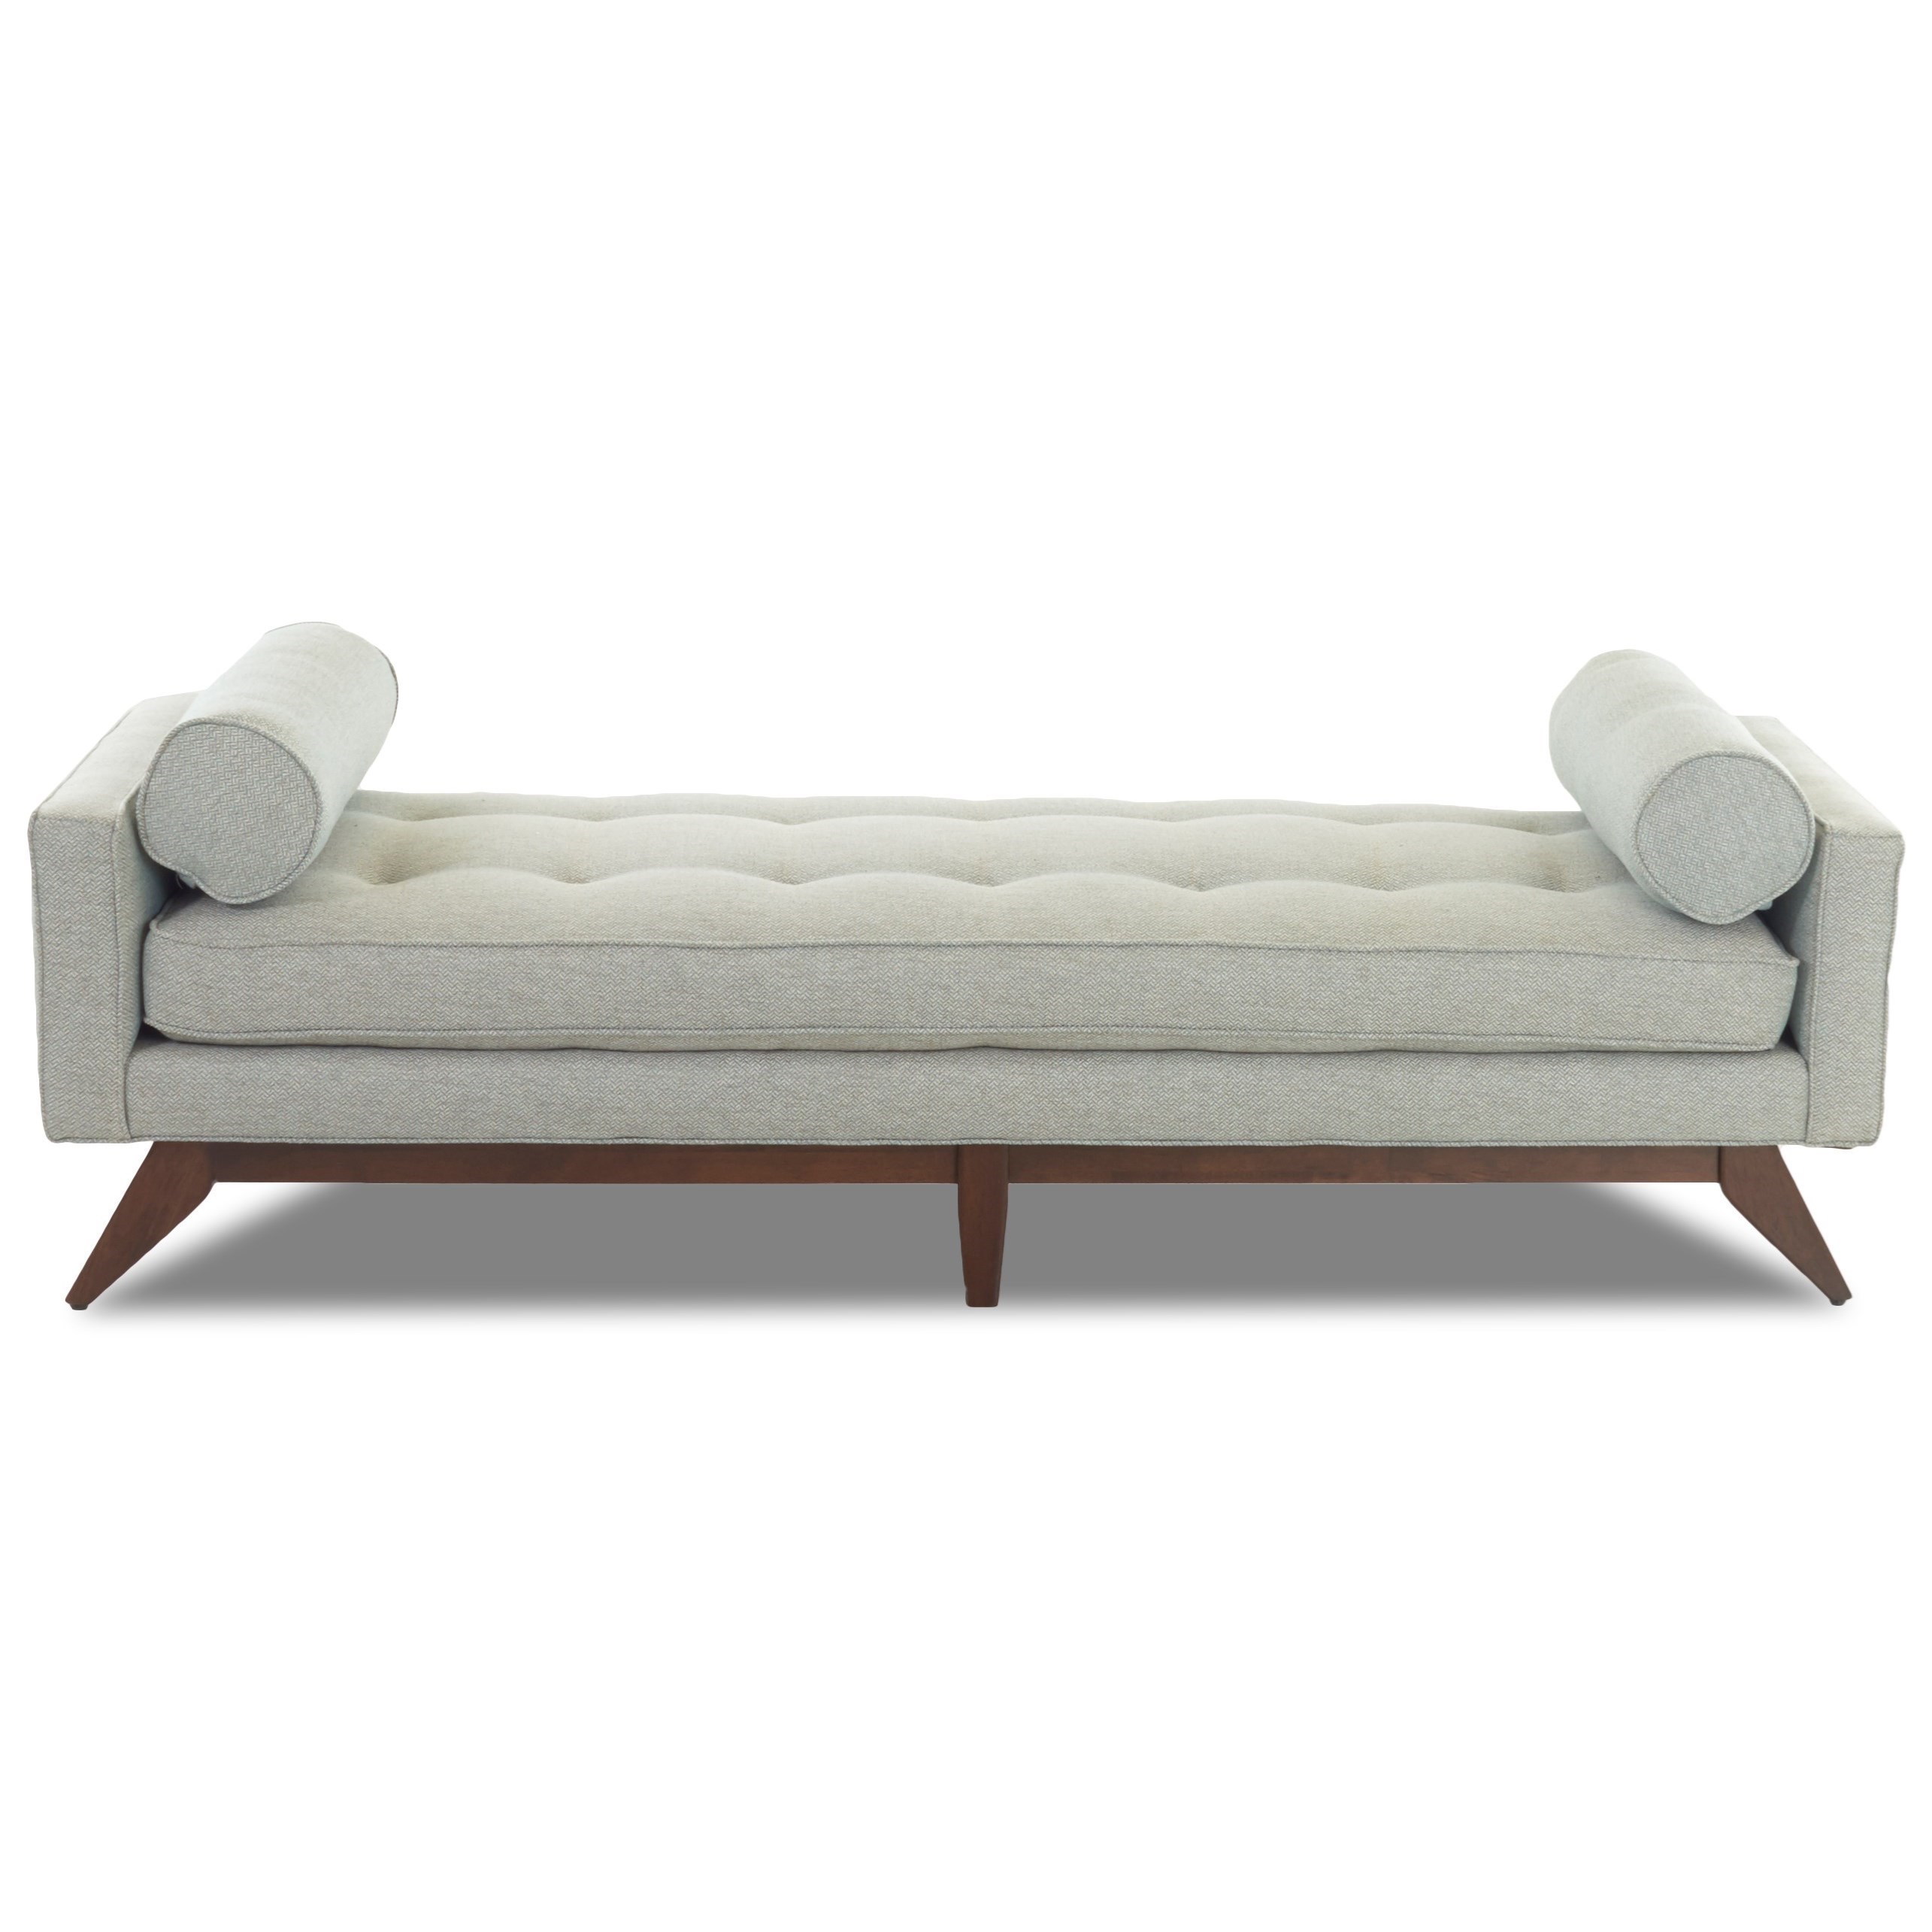 Fairfax Mid-Century Modern Backless Sofa/Bench by Elliston Place